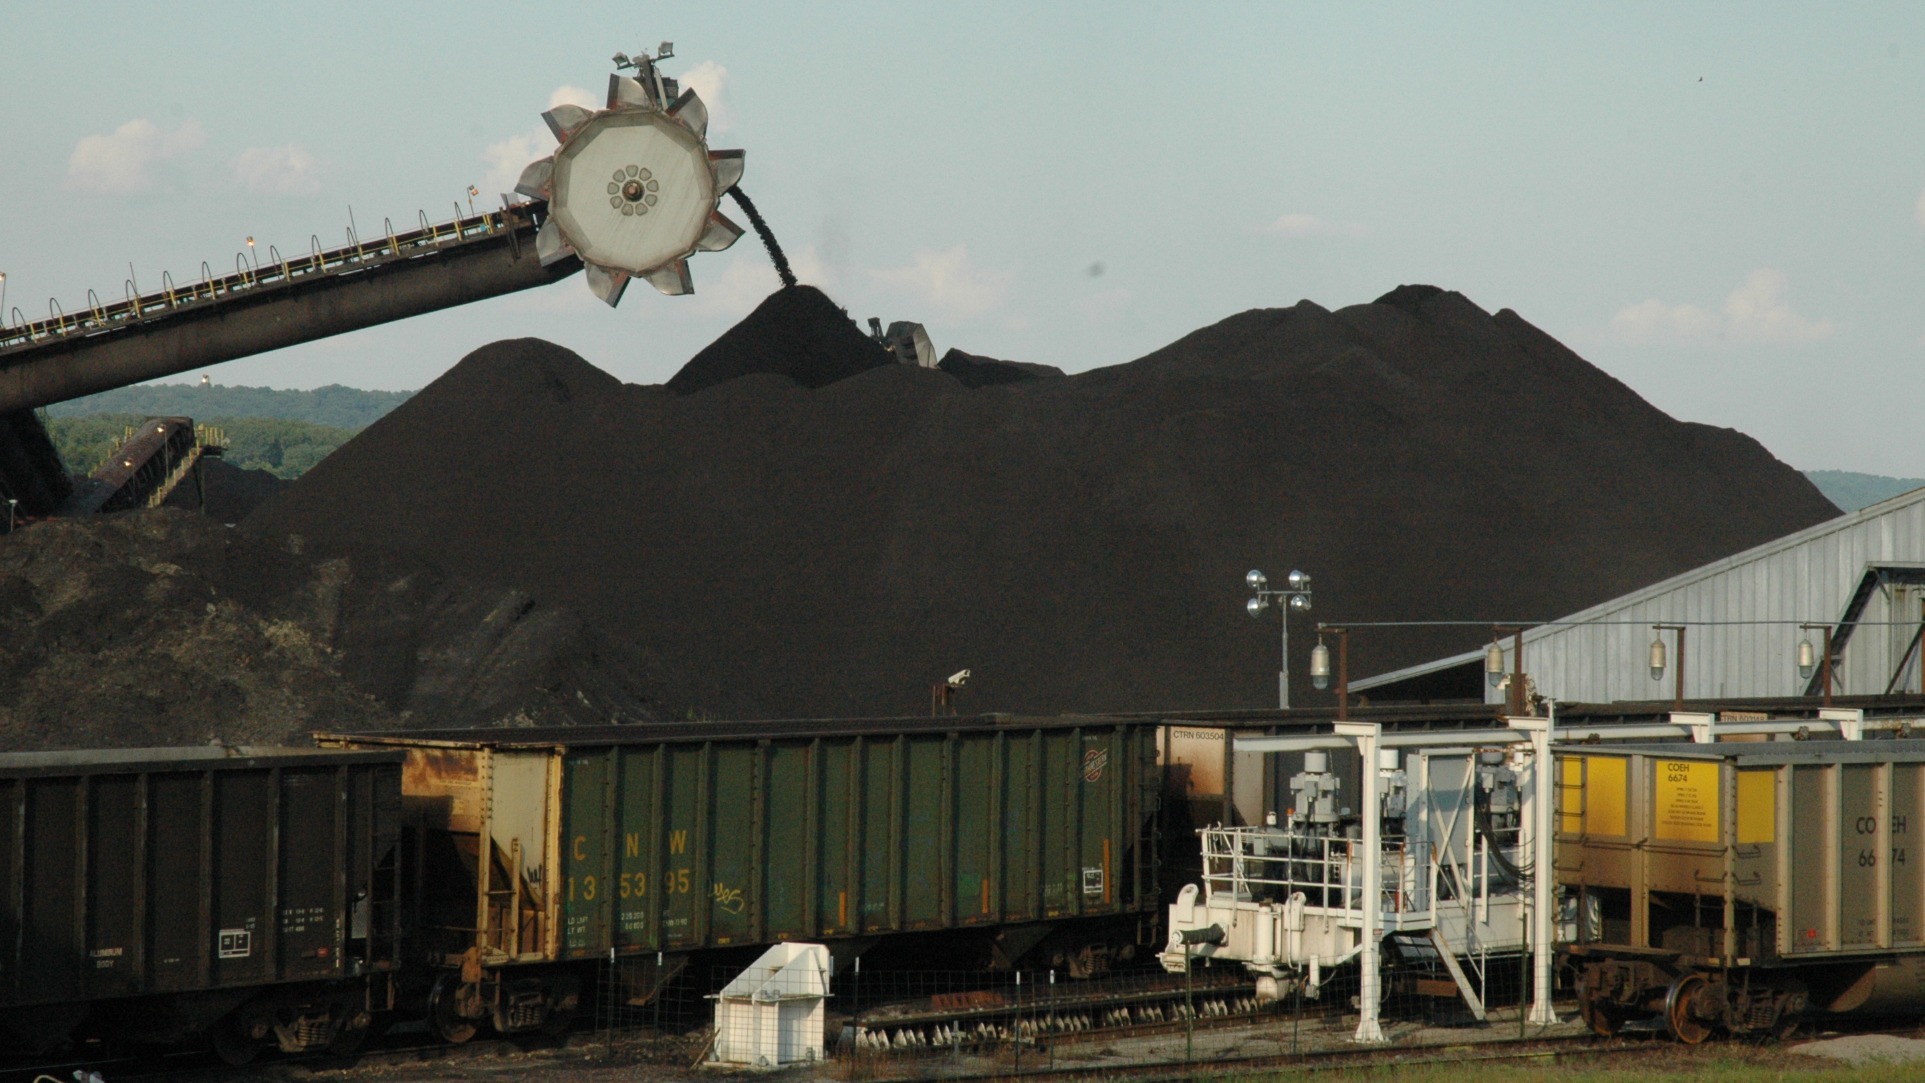 Loading coal onto a ship